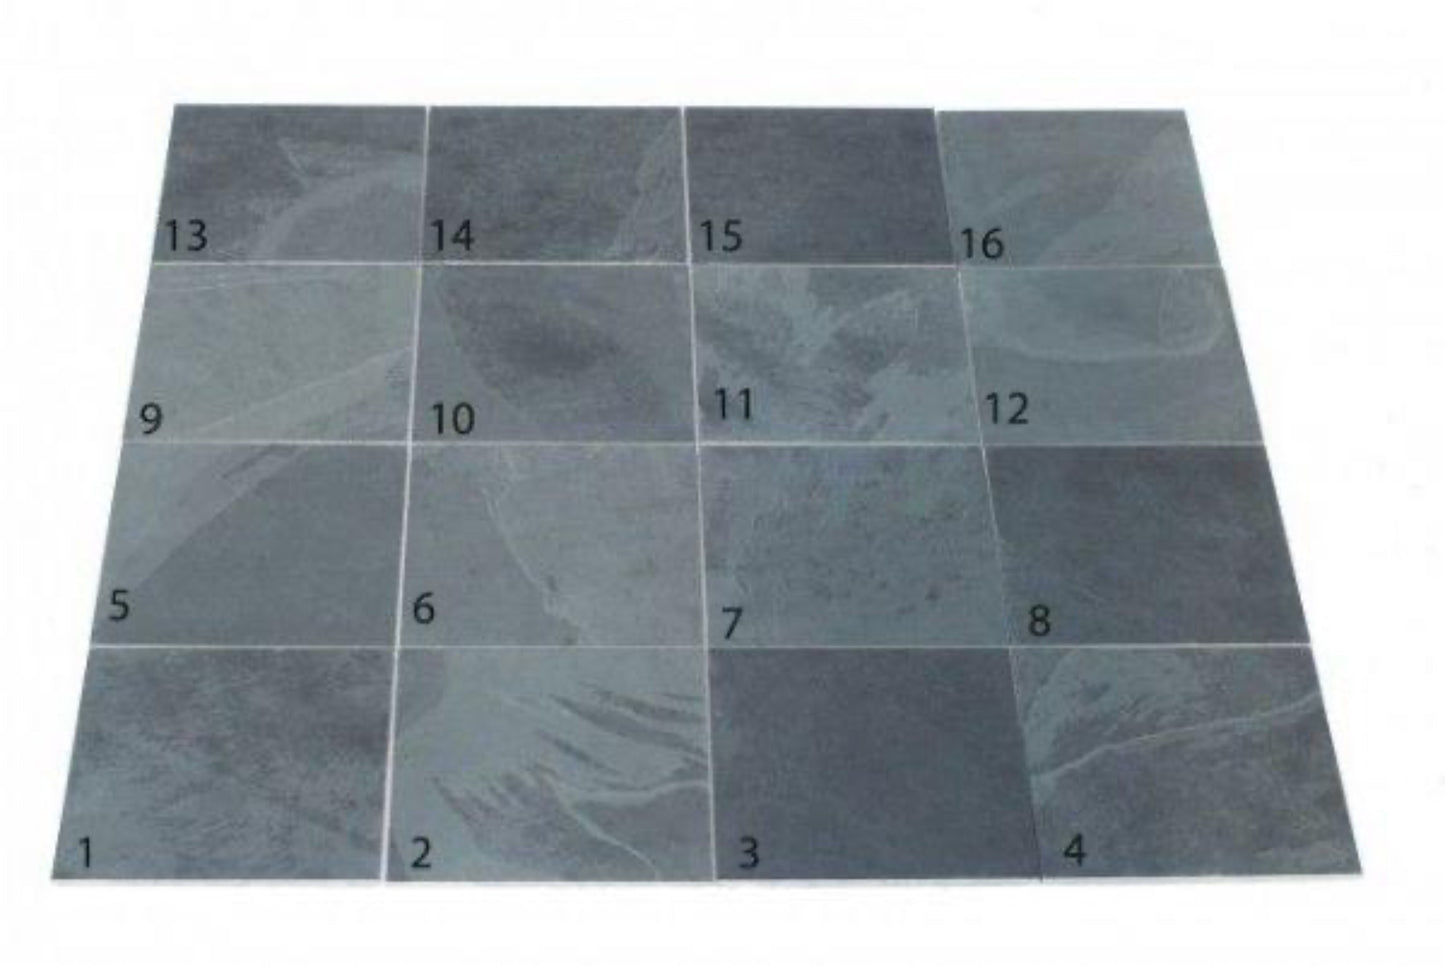 Black Slate Paving Patio Slabs | 600 x 400 x 20 mm slabs | £11.46 each collect Milton Keynes